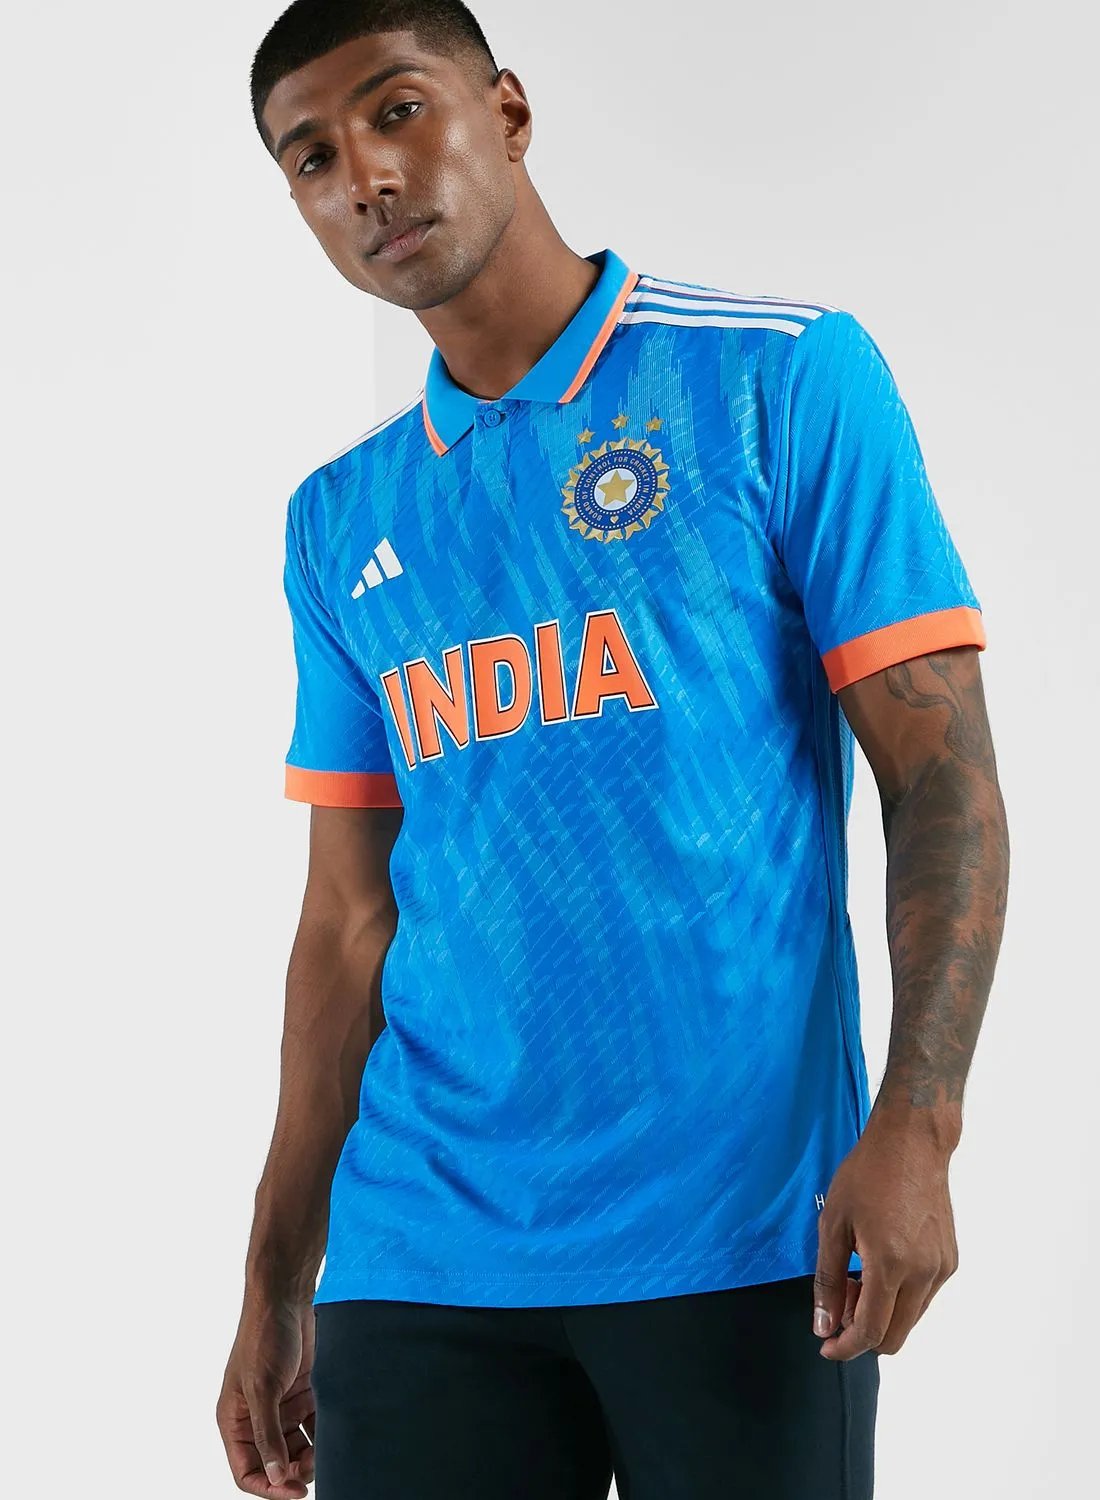 Adidas ODI India Cricket Jersey